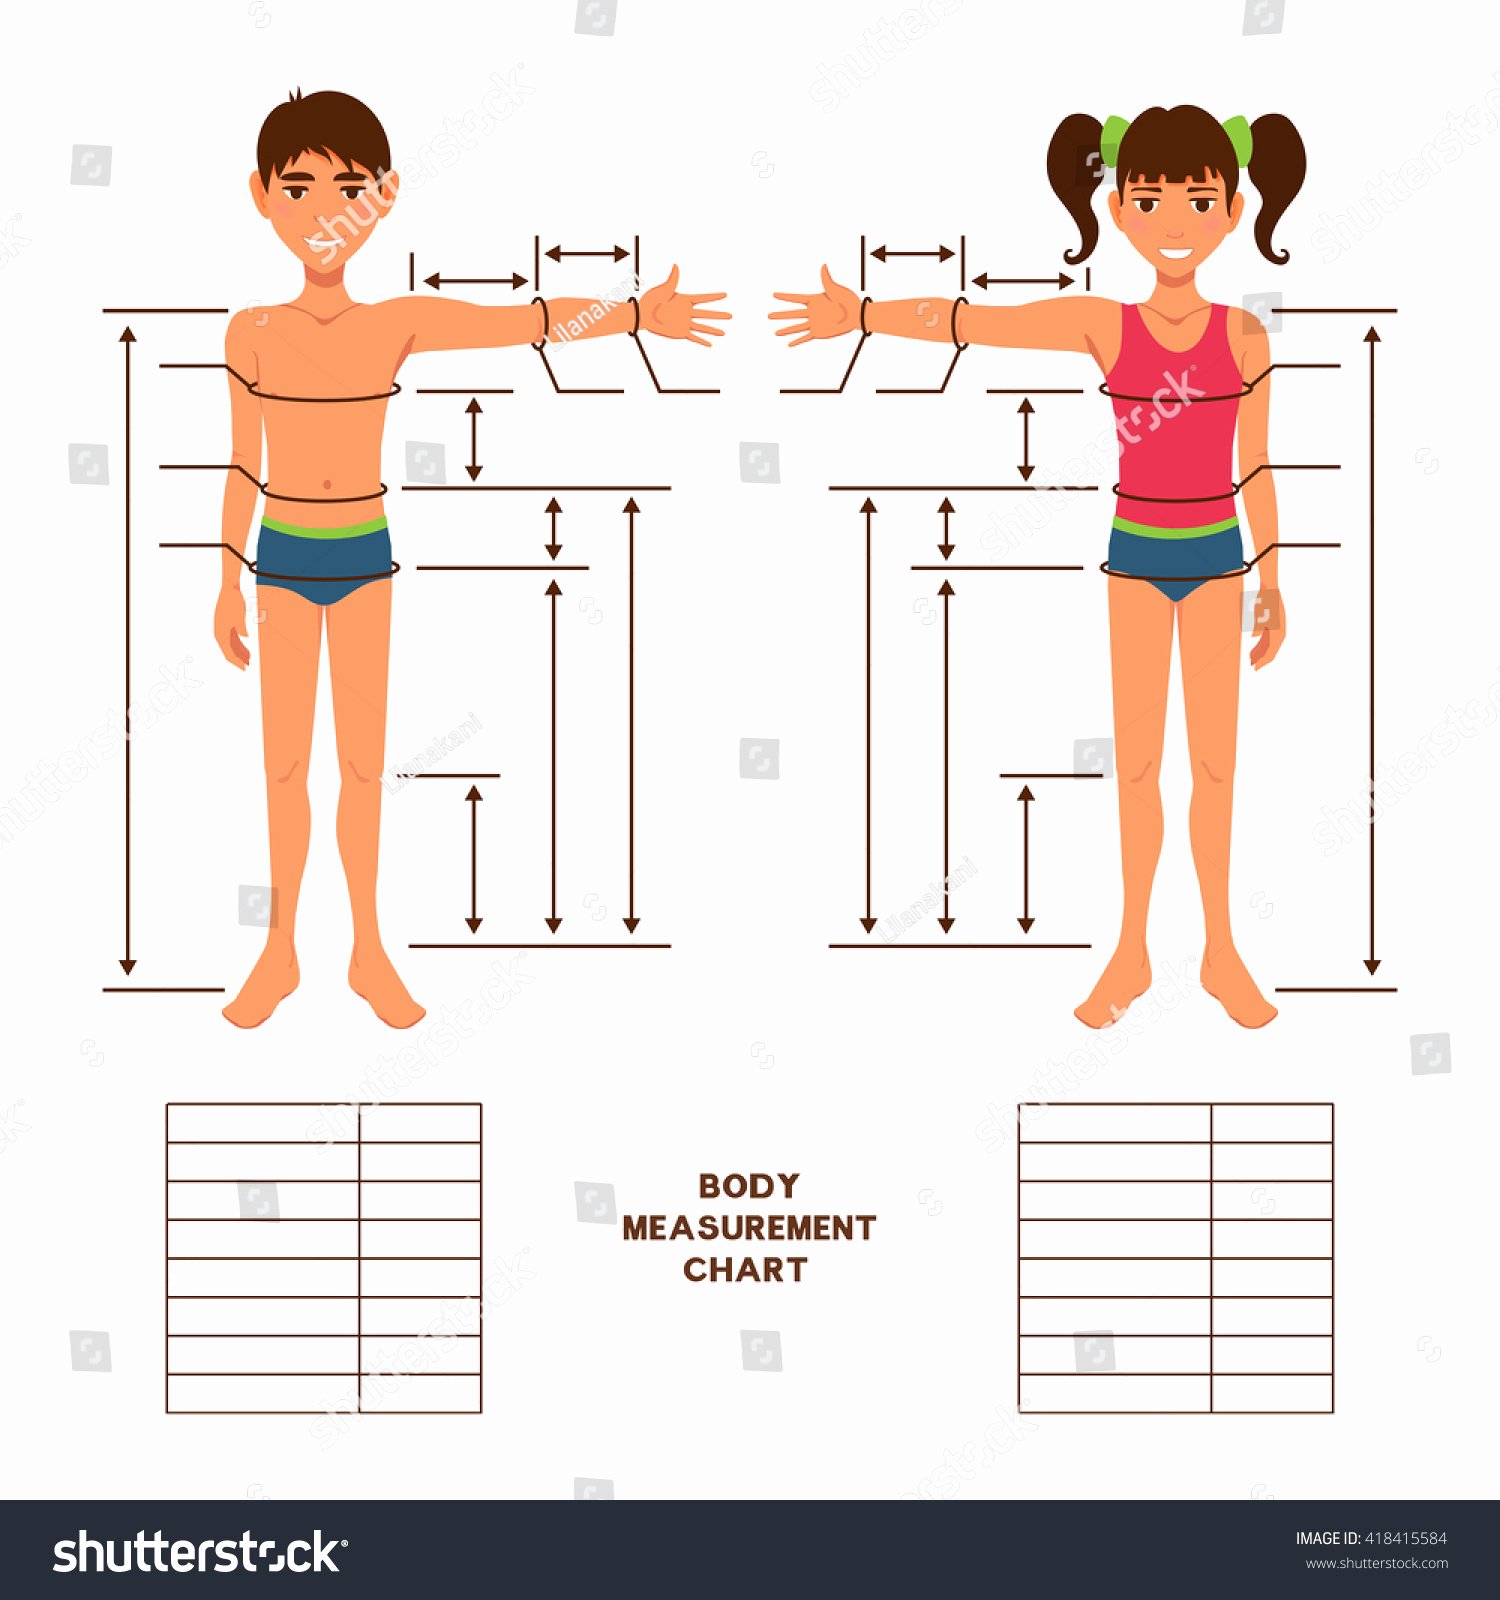 Clothing Size Chart Template Fresh Child Body Measurement Chart Scheme Measurement Stock Vector Shutterstock